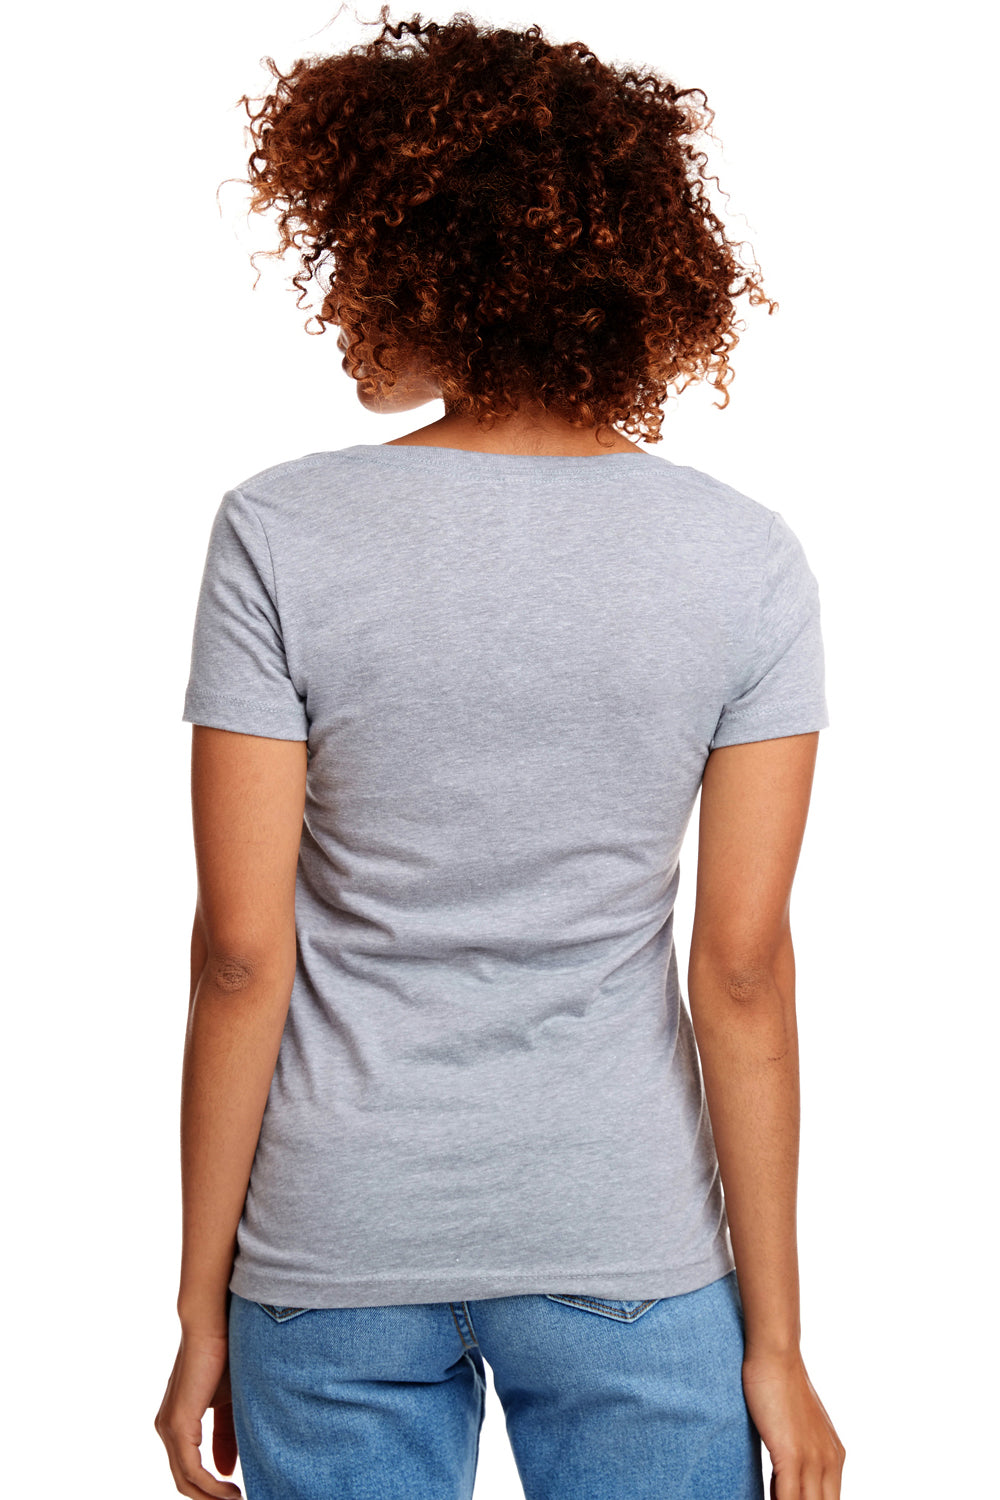 Next Level N1540 Womens Ideal Jersey Short Sleeve V-Neck T-Shirt Heather Grey Back